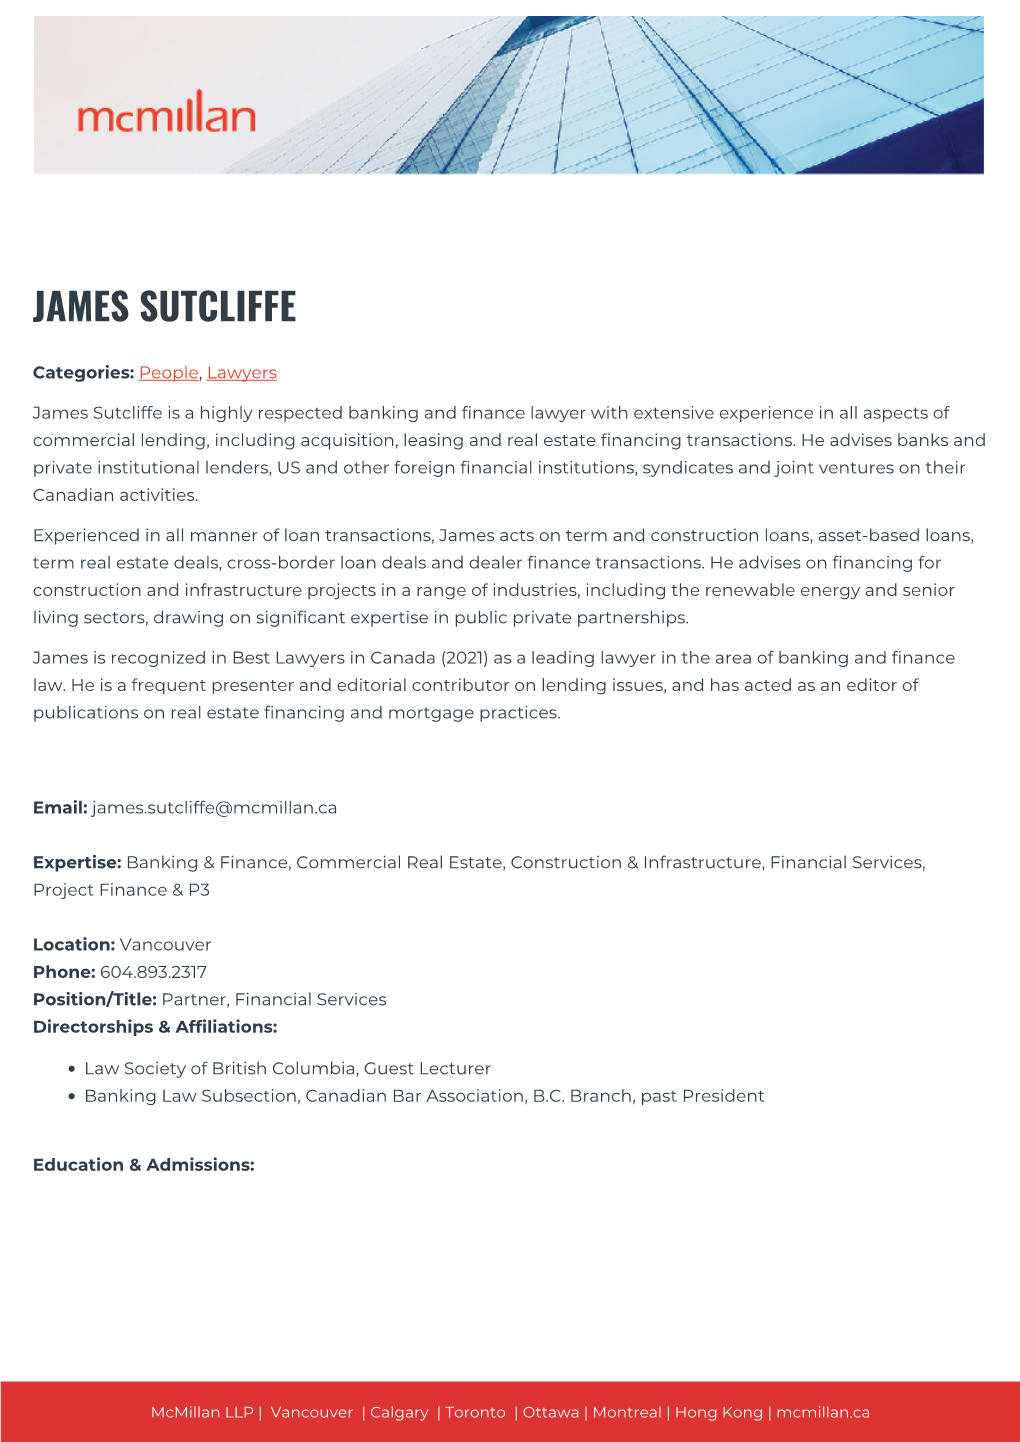 James Sutcliffe